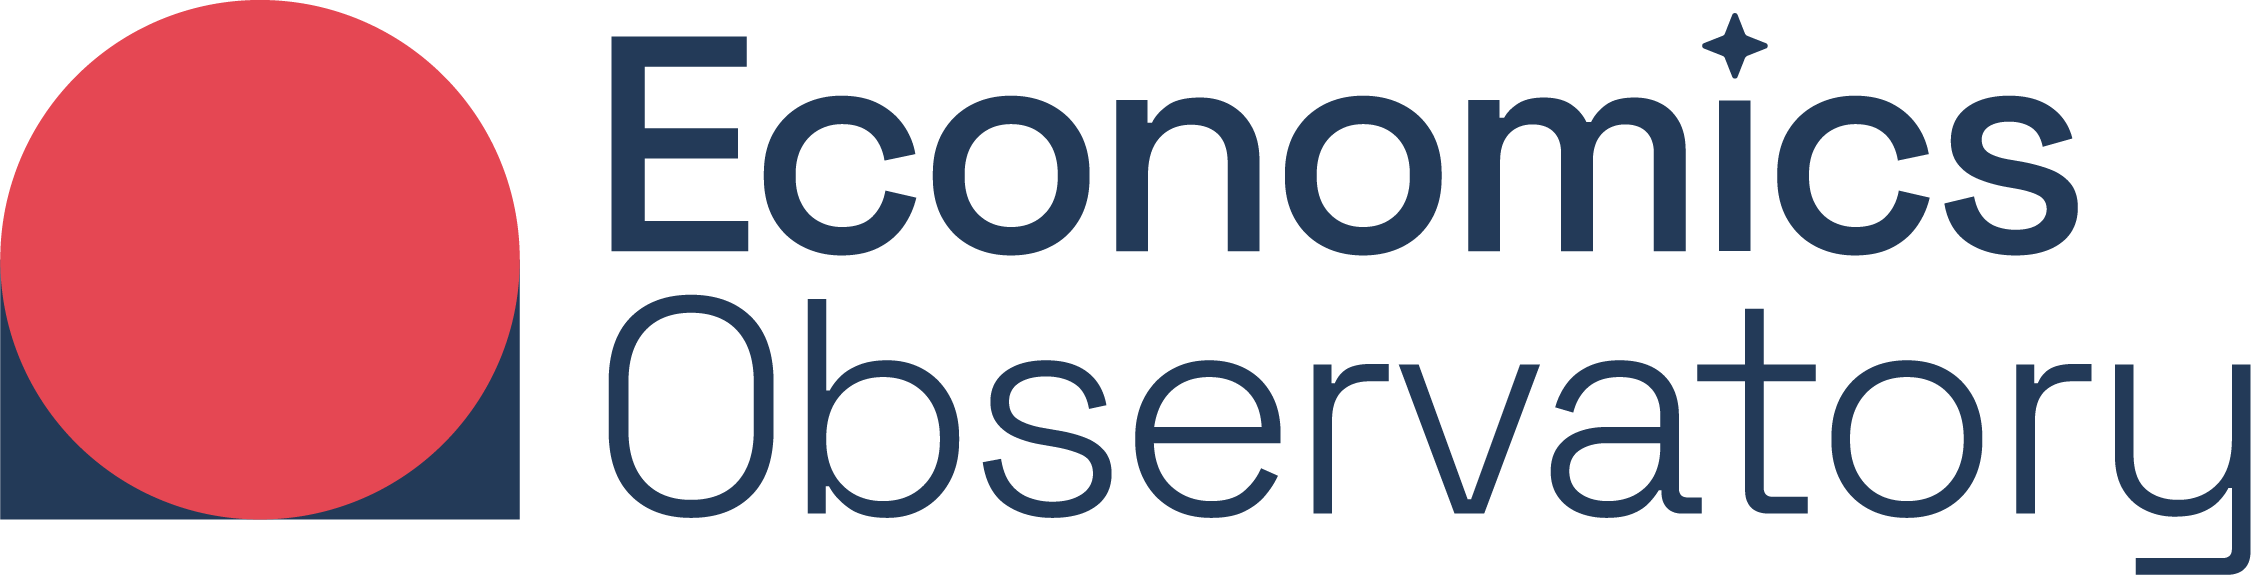 Economics Observatory